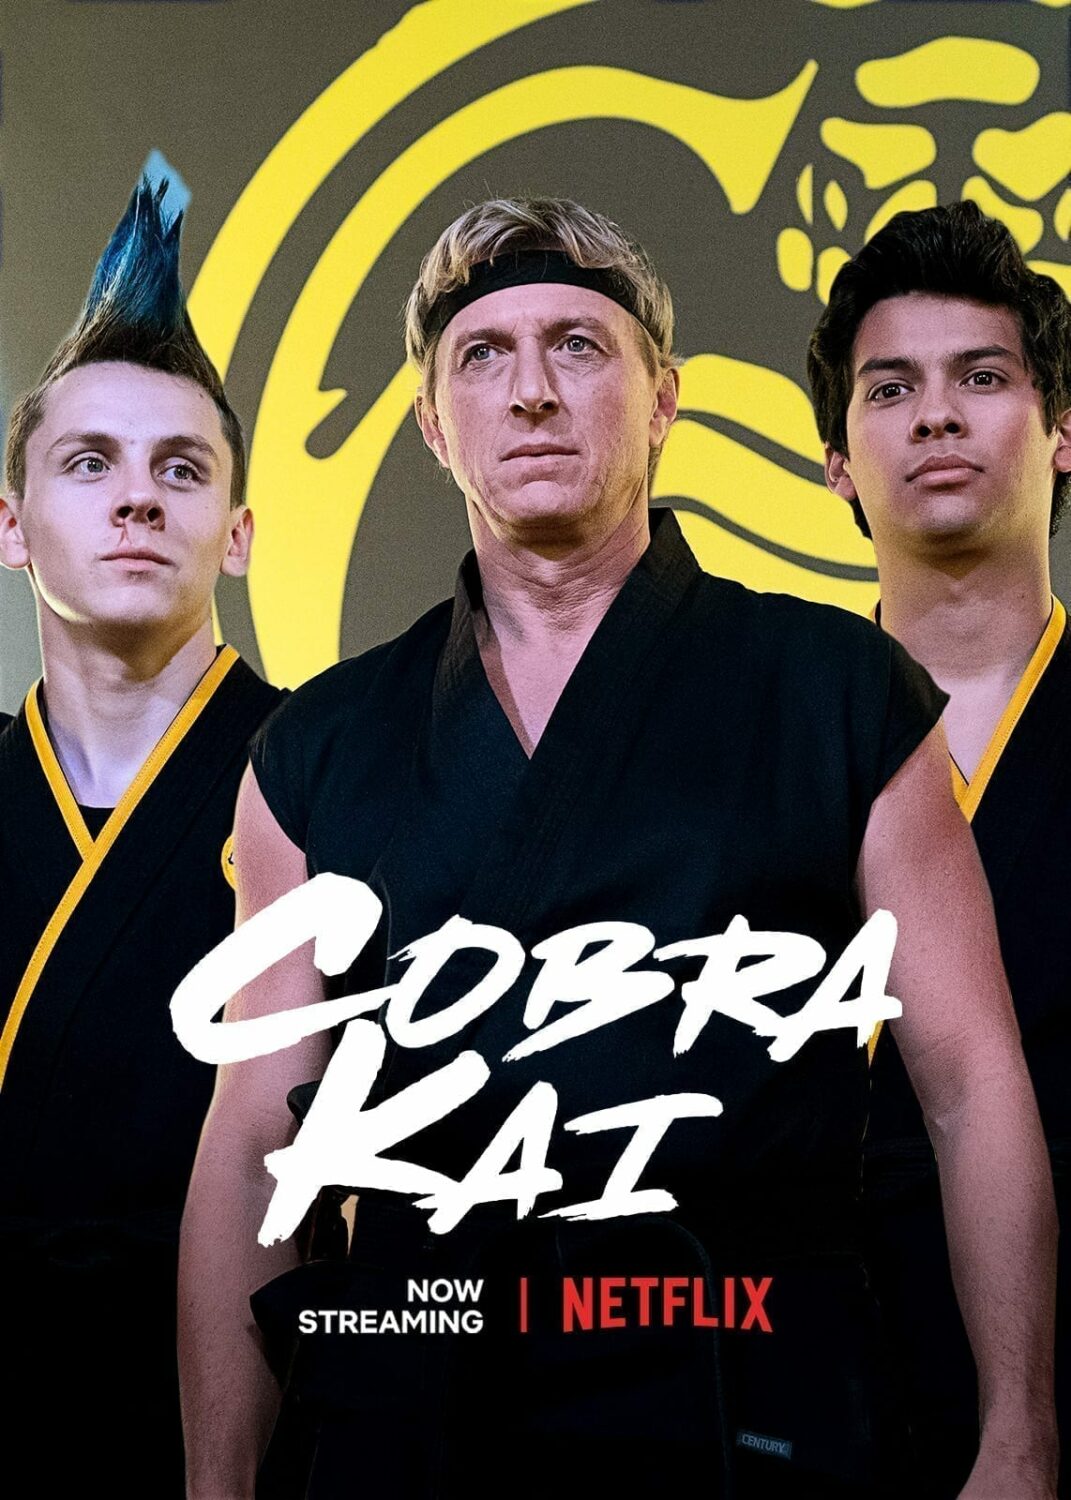 Serie Cobra Kai Temporada Estreno Netflix Enero